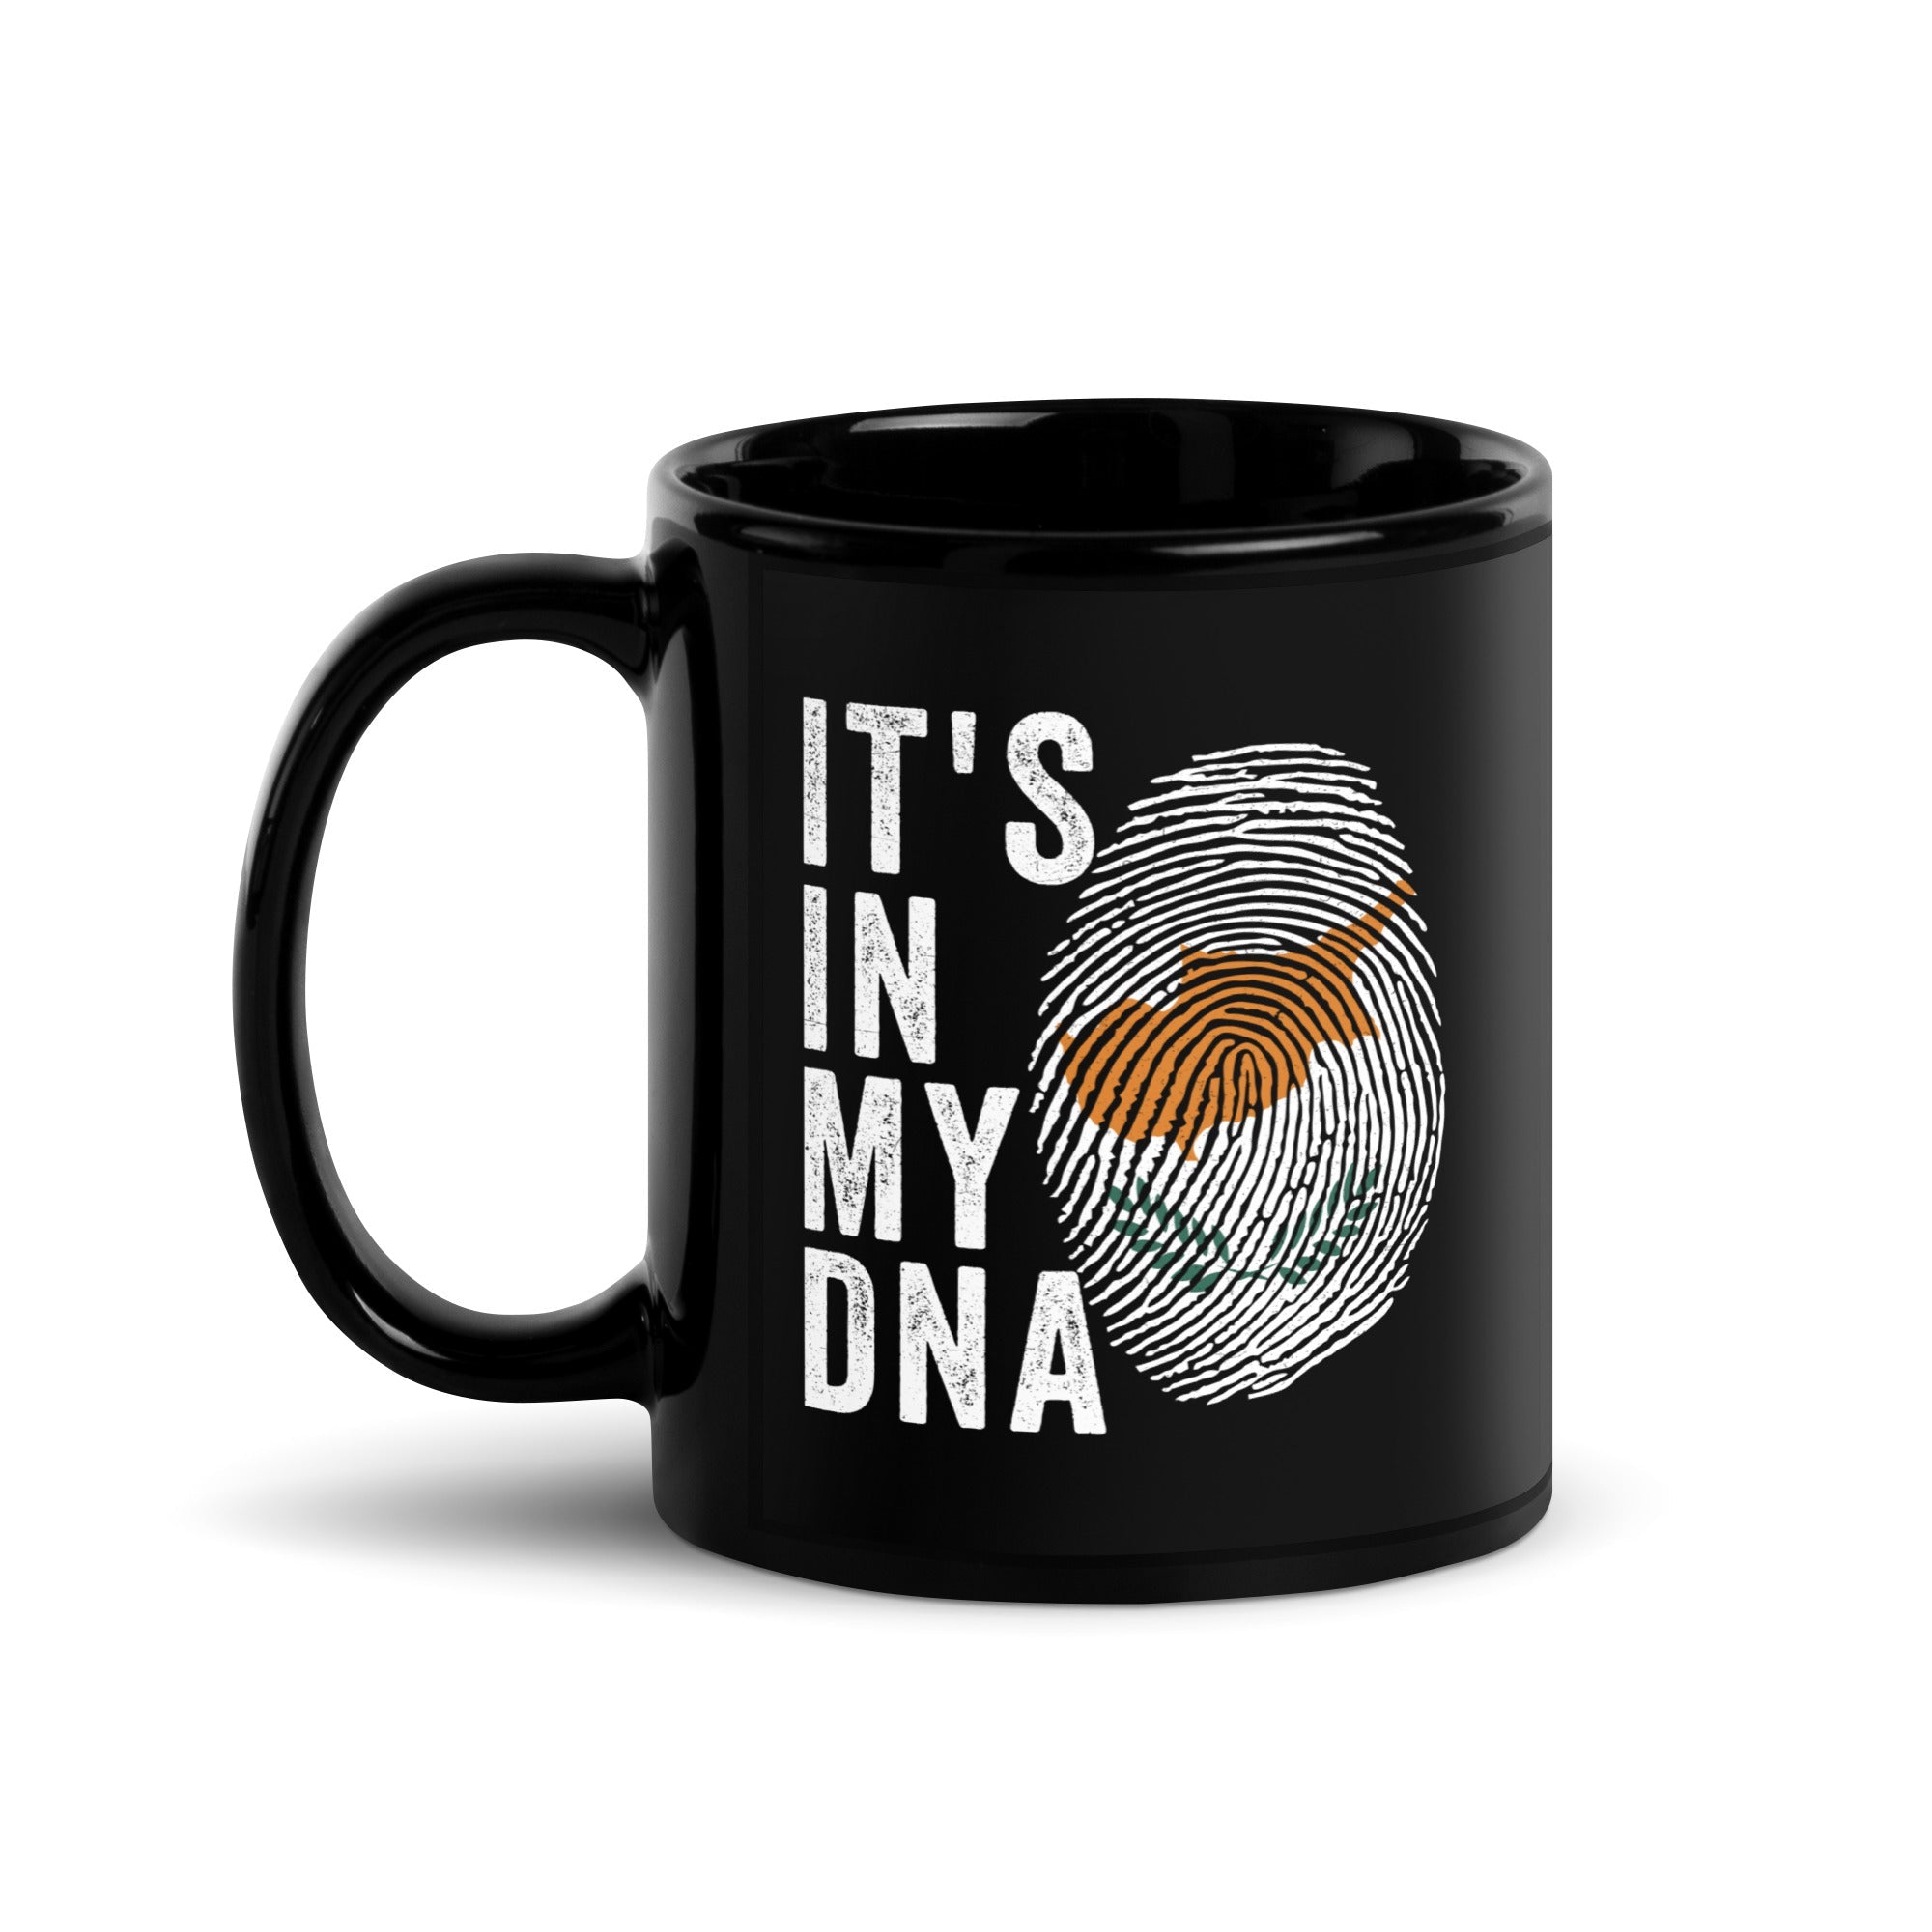 It's In My DNA - Cyprus Flag Mug